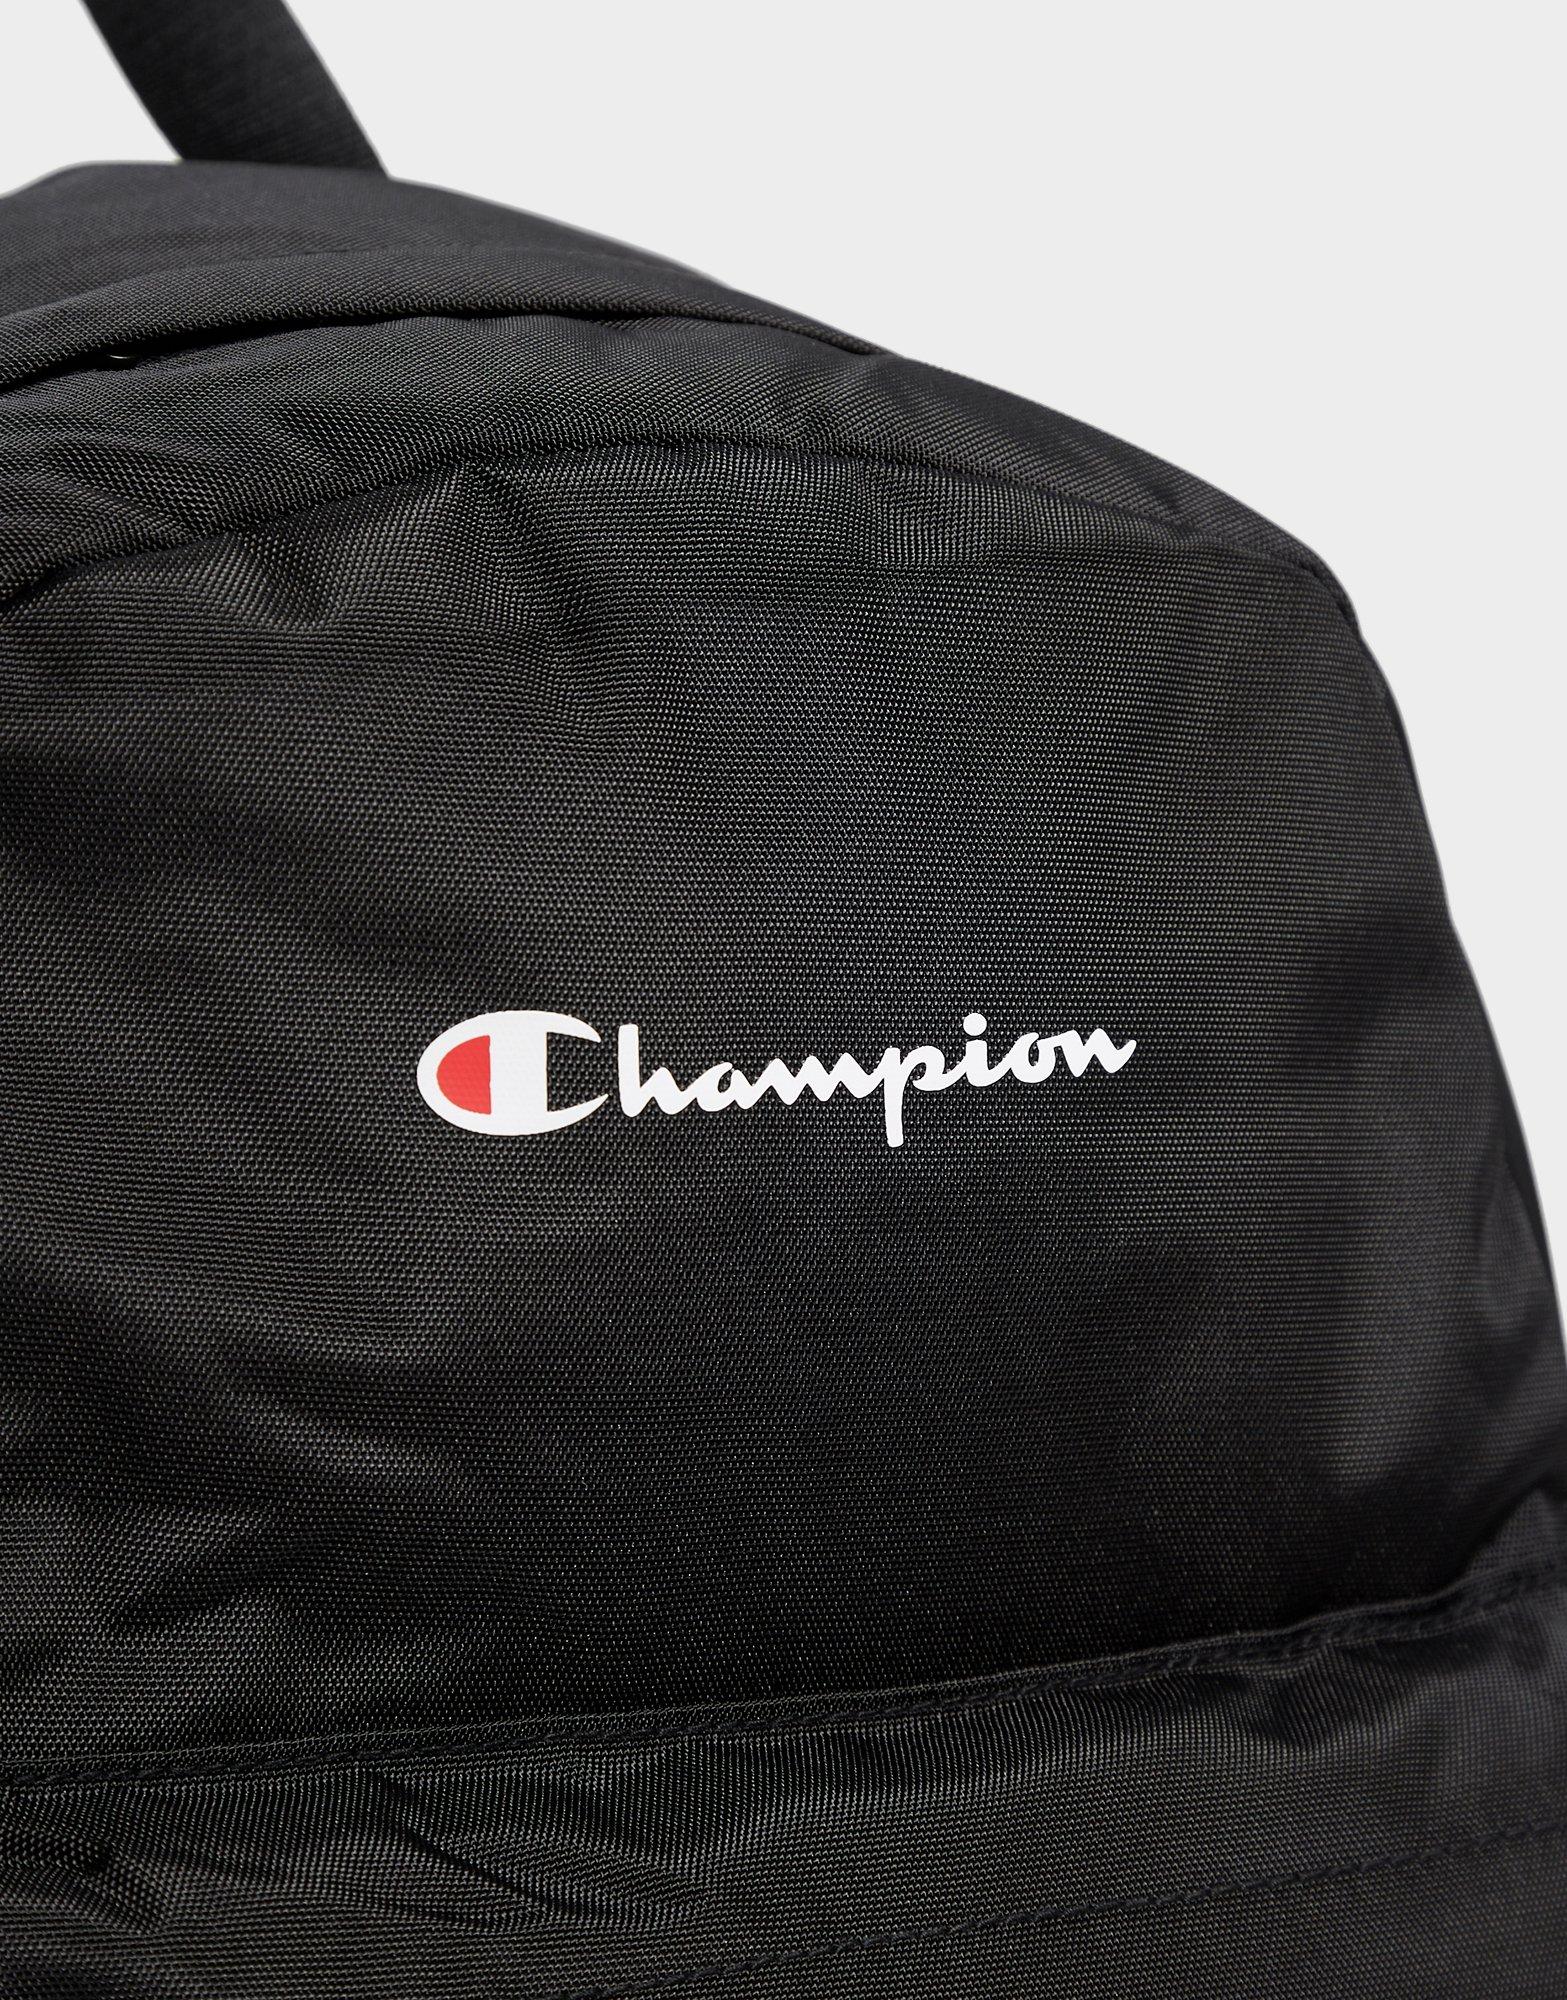 champion backpack mens 2015